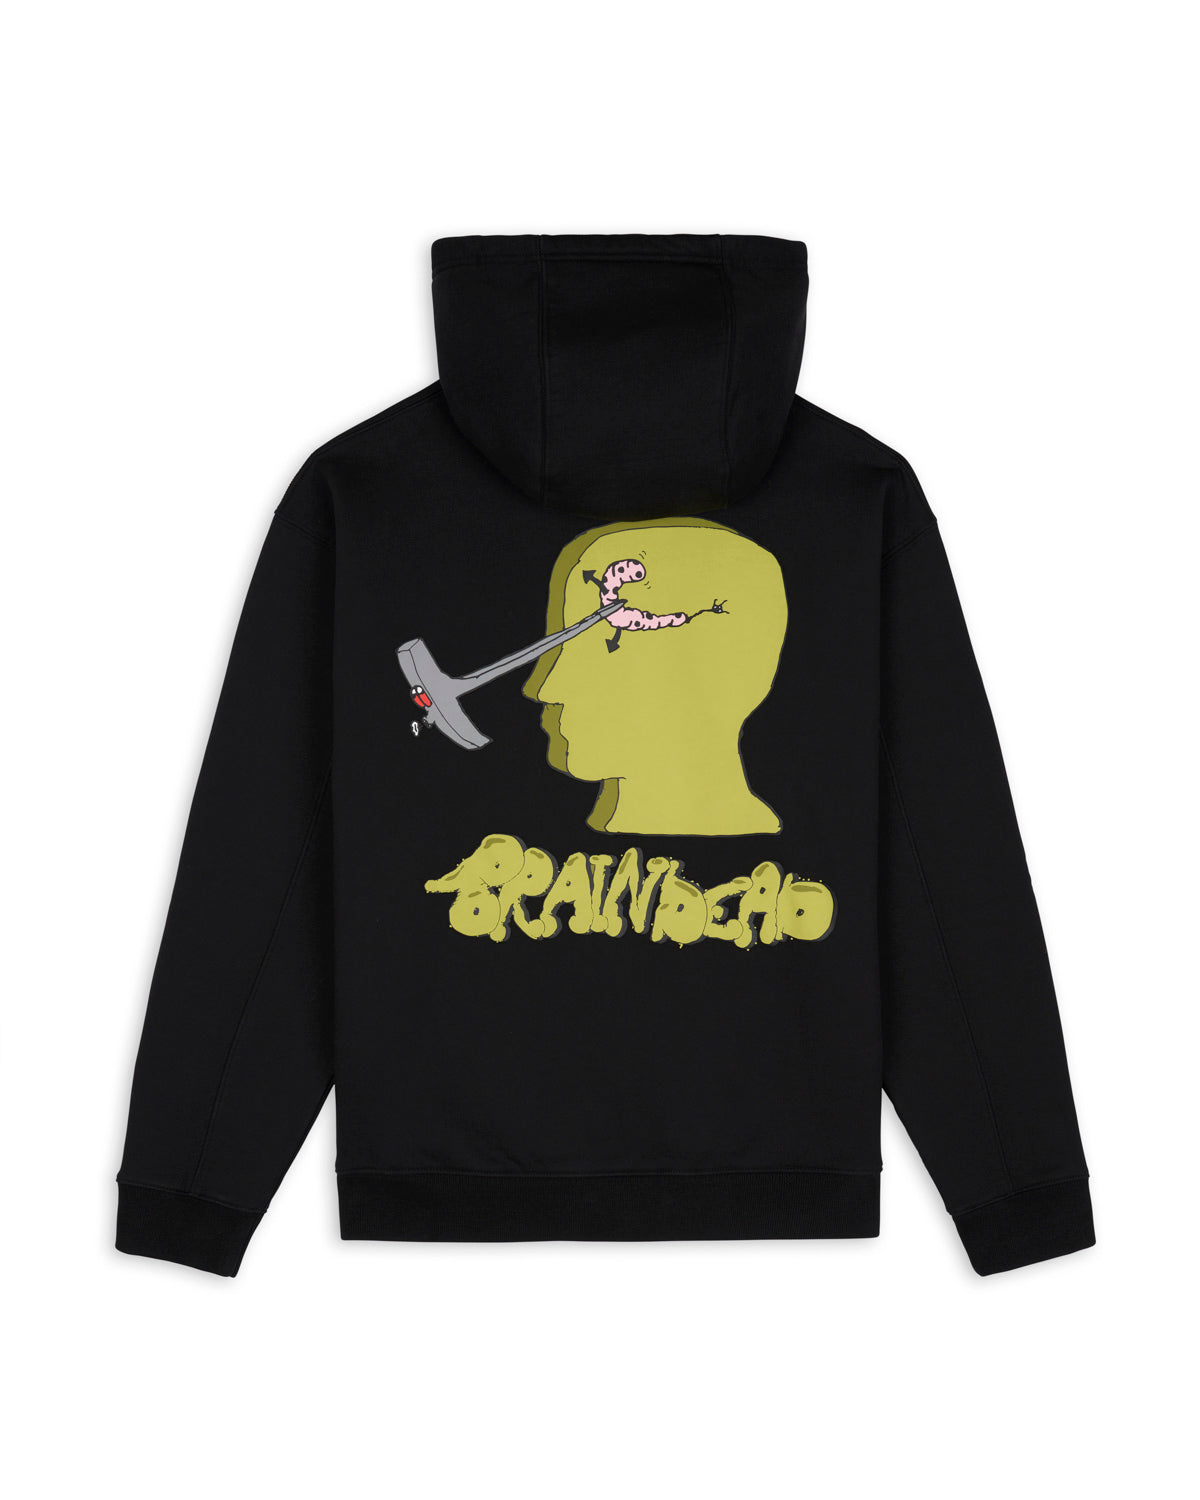 Stoned Head Zip Hooded Sweatshirt - Black 2